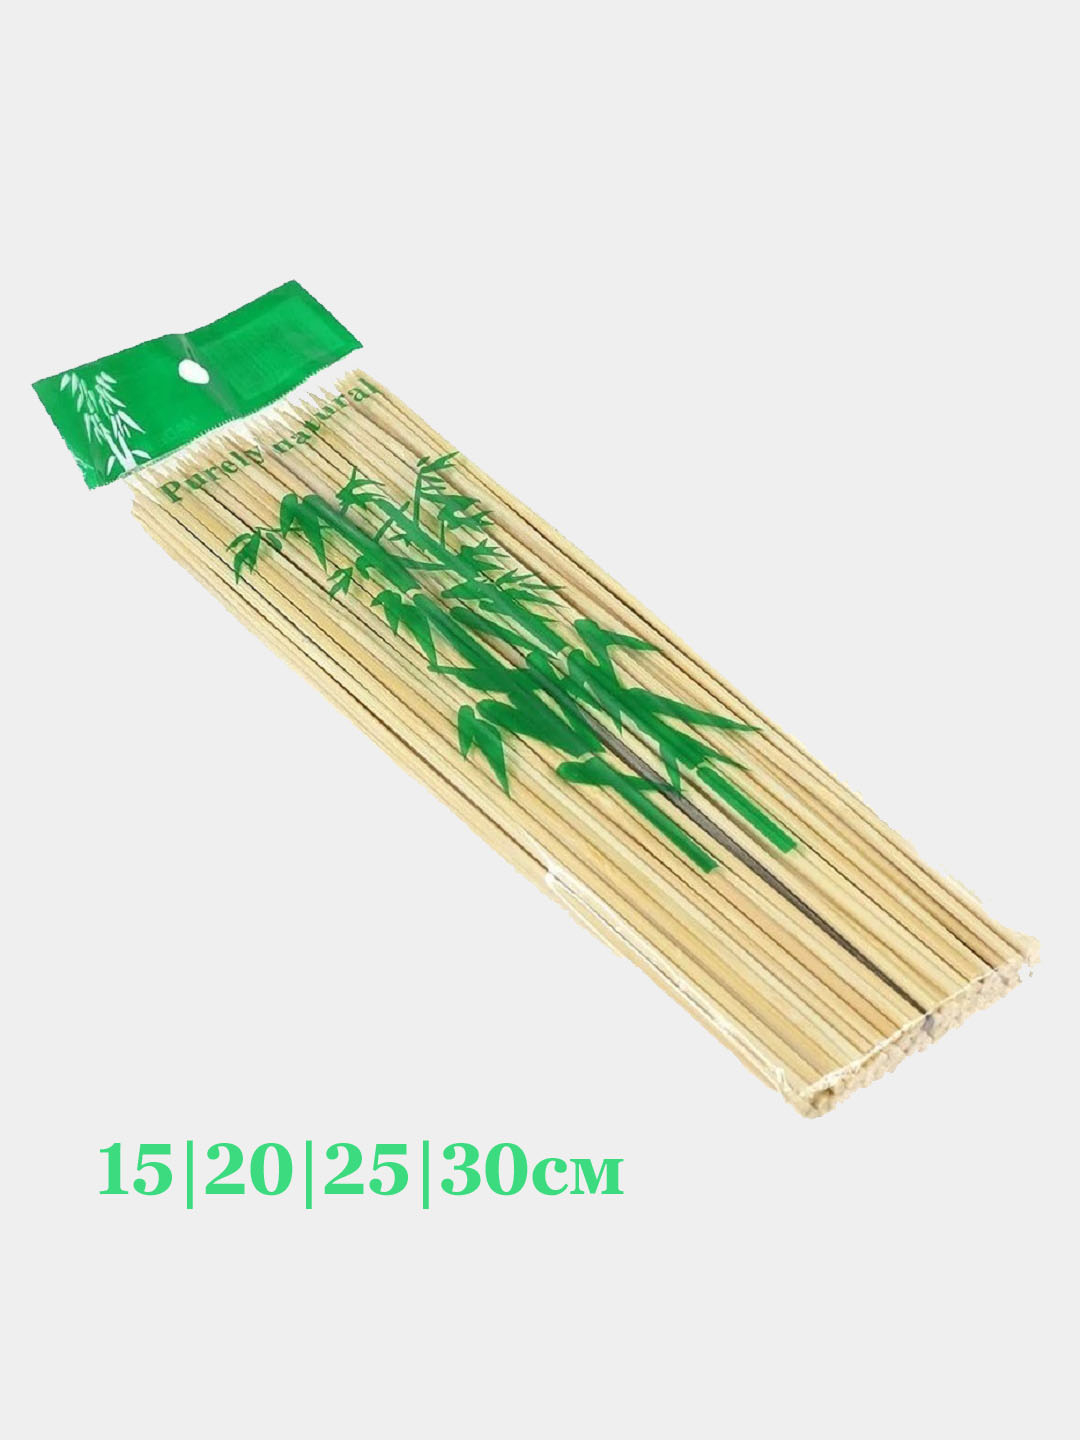 -шпажки бамбуковые 15/20/25/30 см, 100шт за 65 ₽  в .